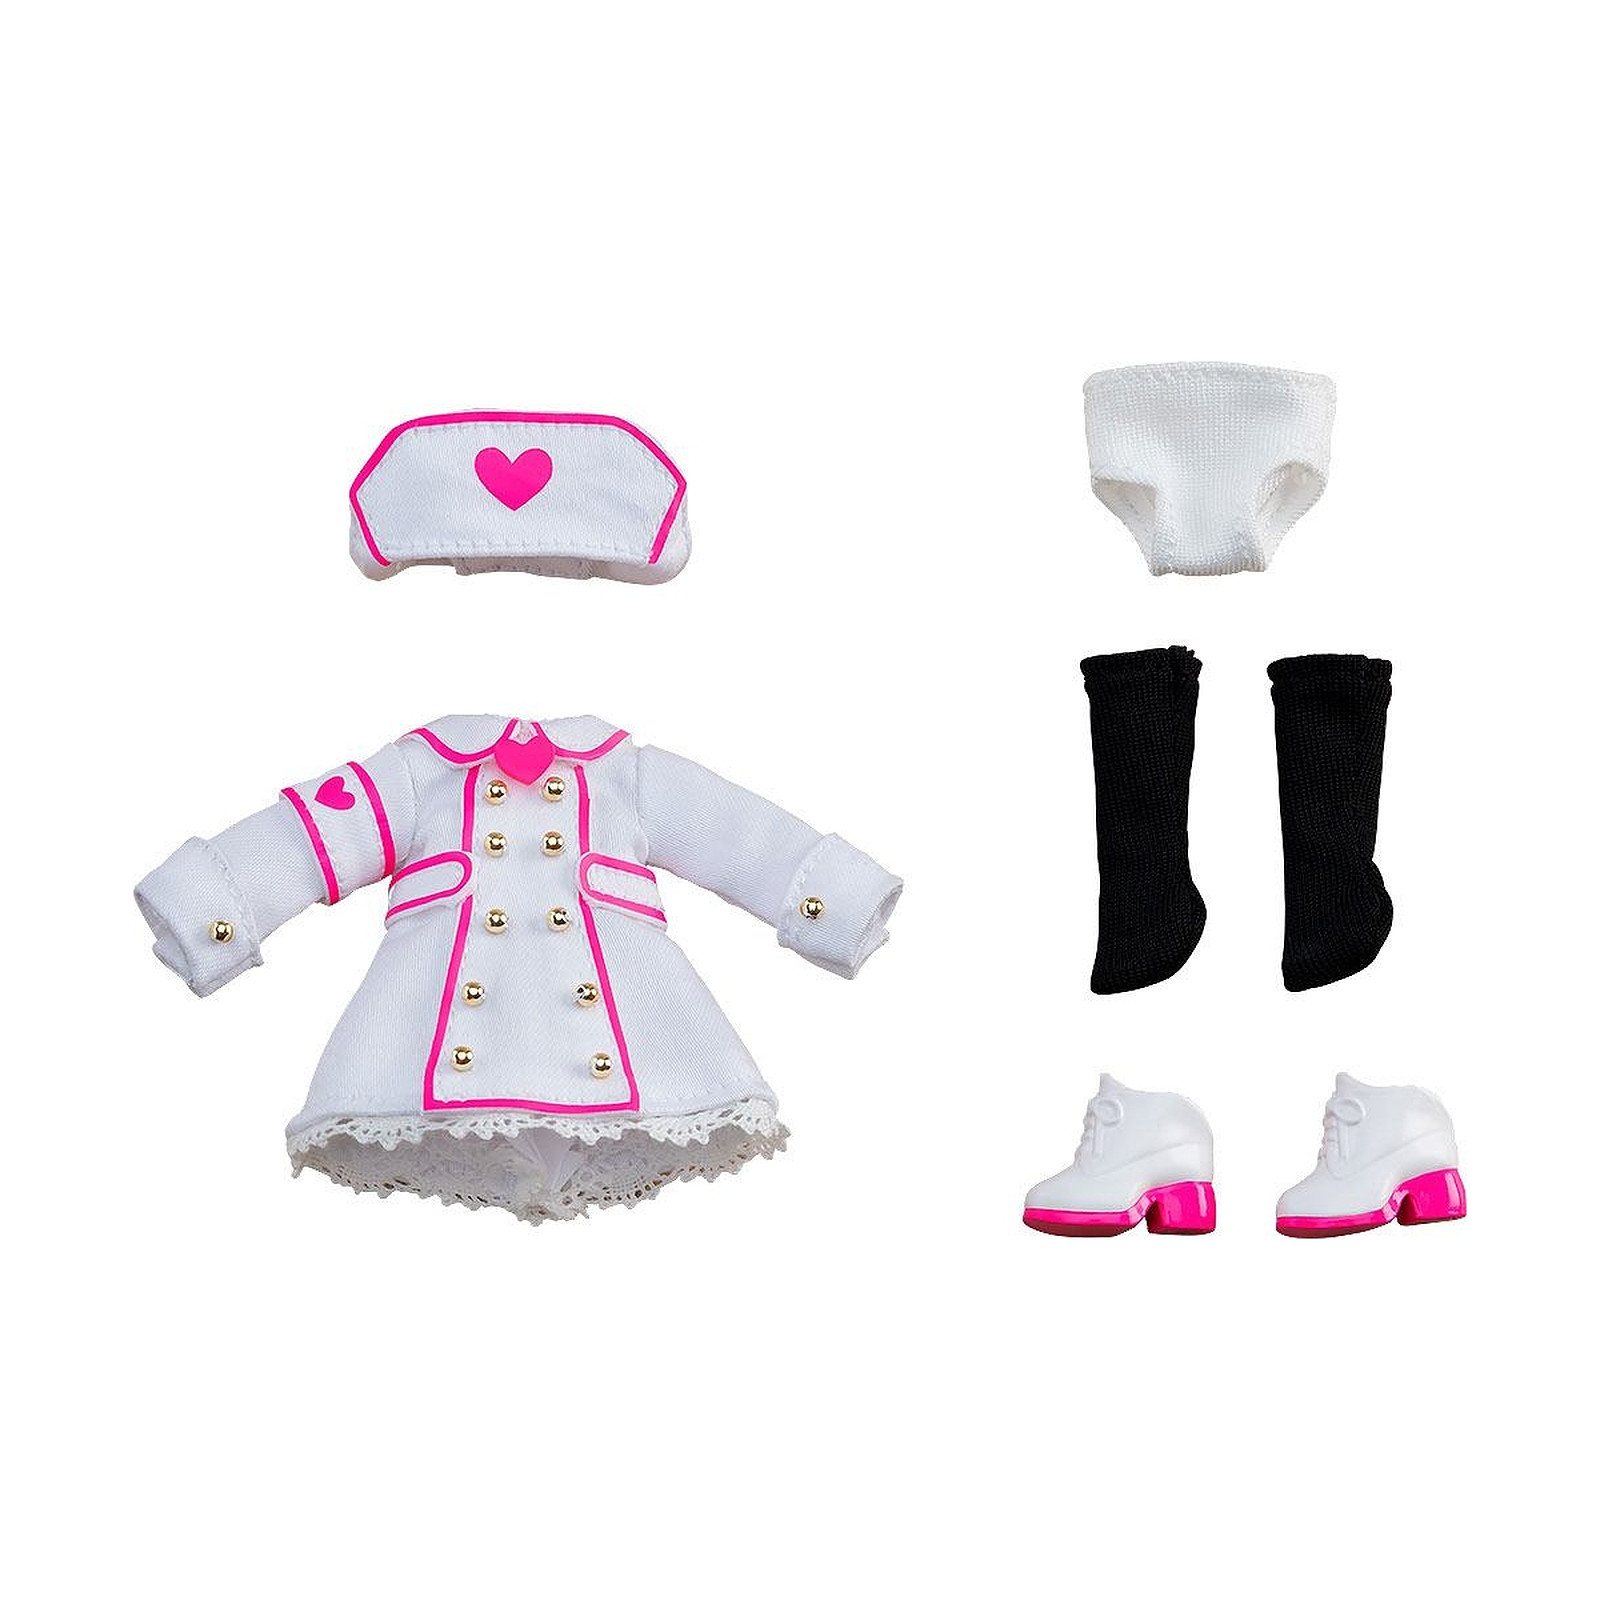 Original Character - Accessoires pour figurines Nendoroid Doll Outfit Set Nurse - White - Figurines Good Smile Company